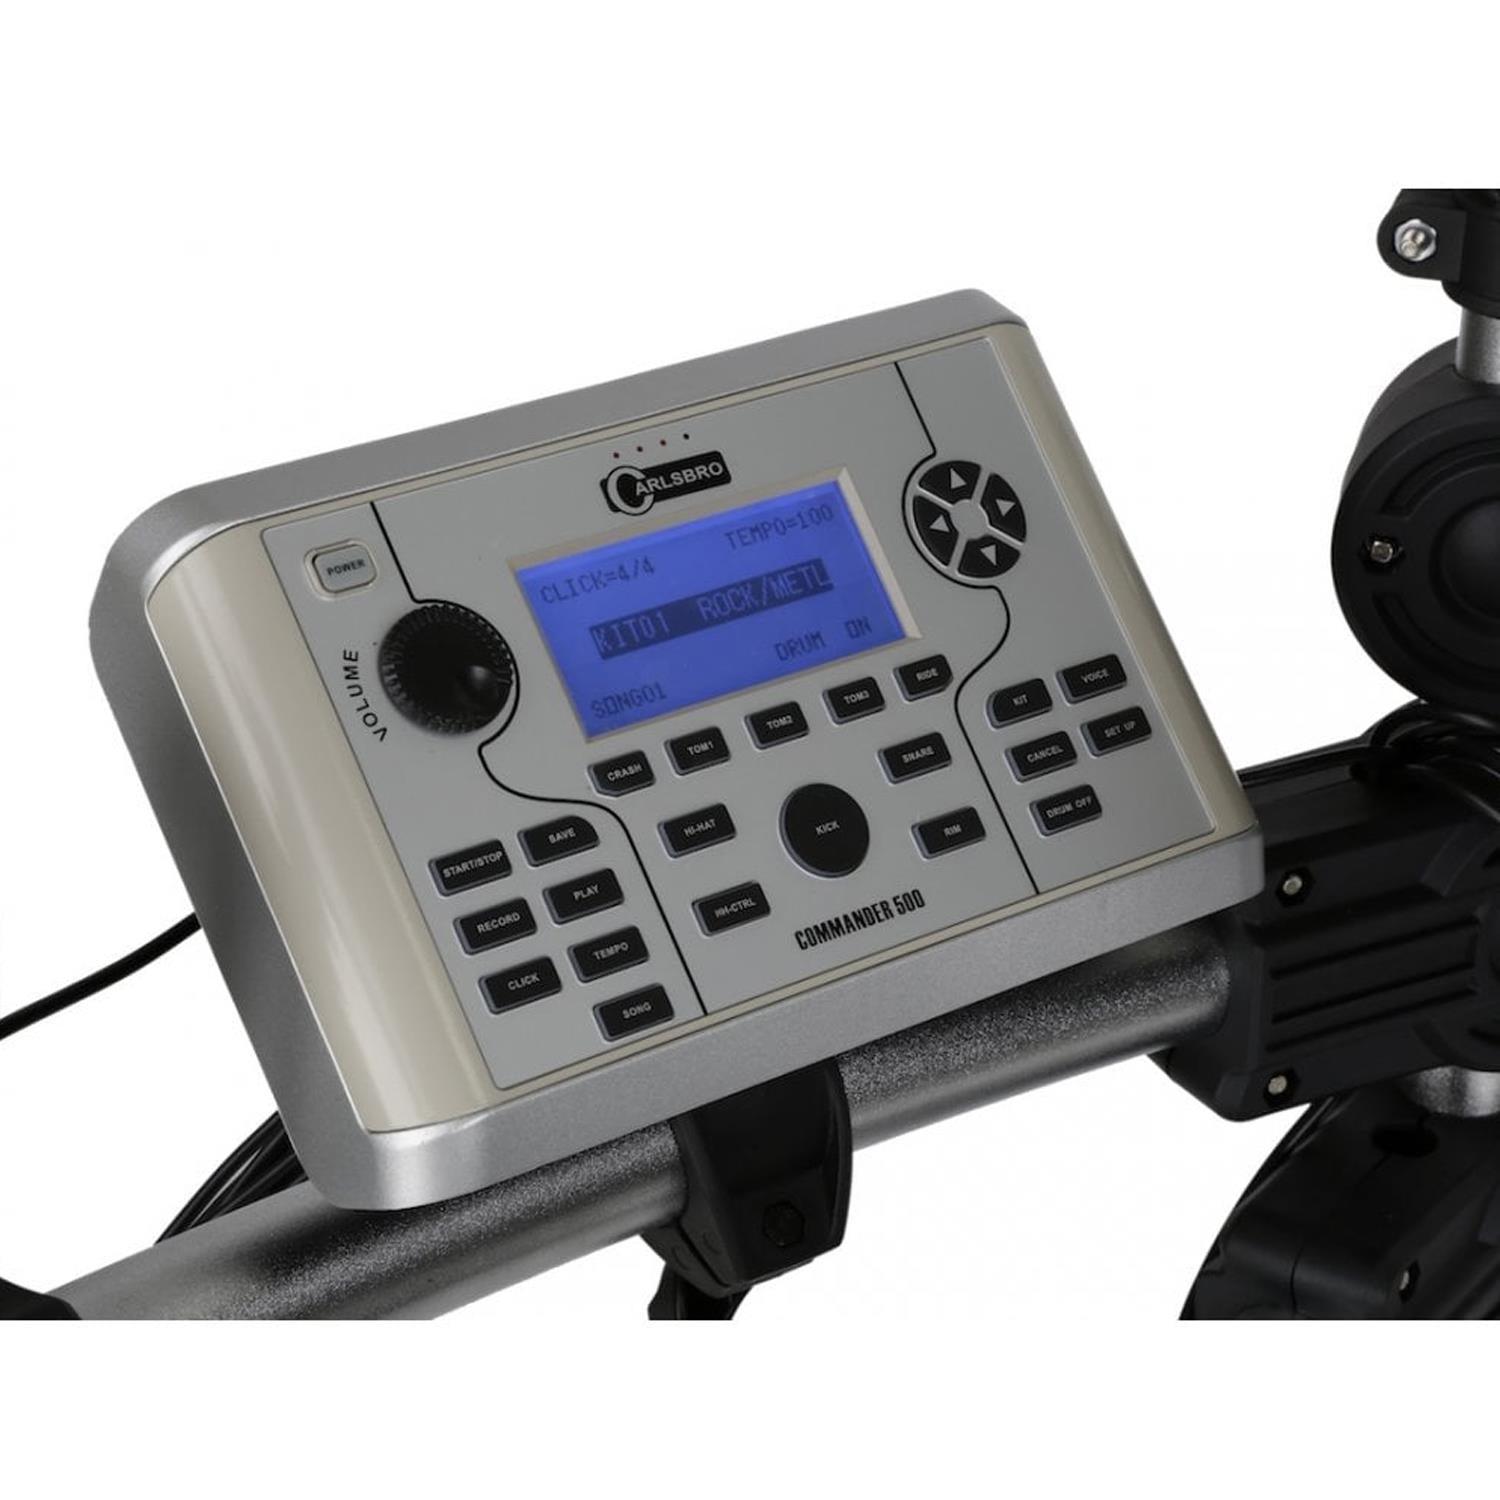 Carlsbro CSD500 8-Piece Electronic Full Mesh Drum Kit - DY Pro Audio